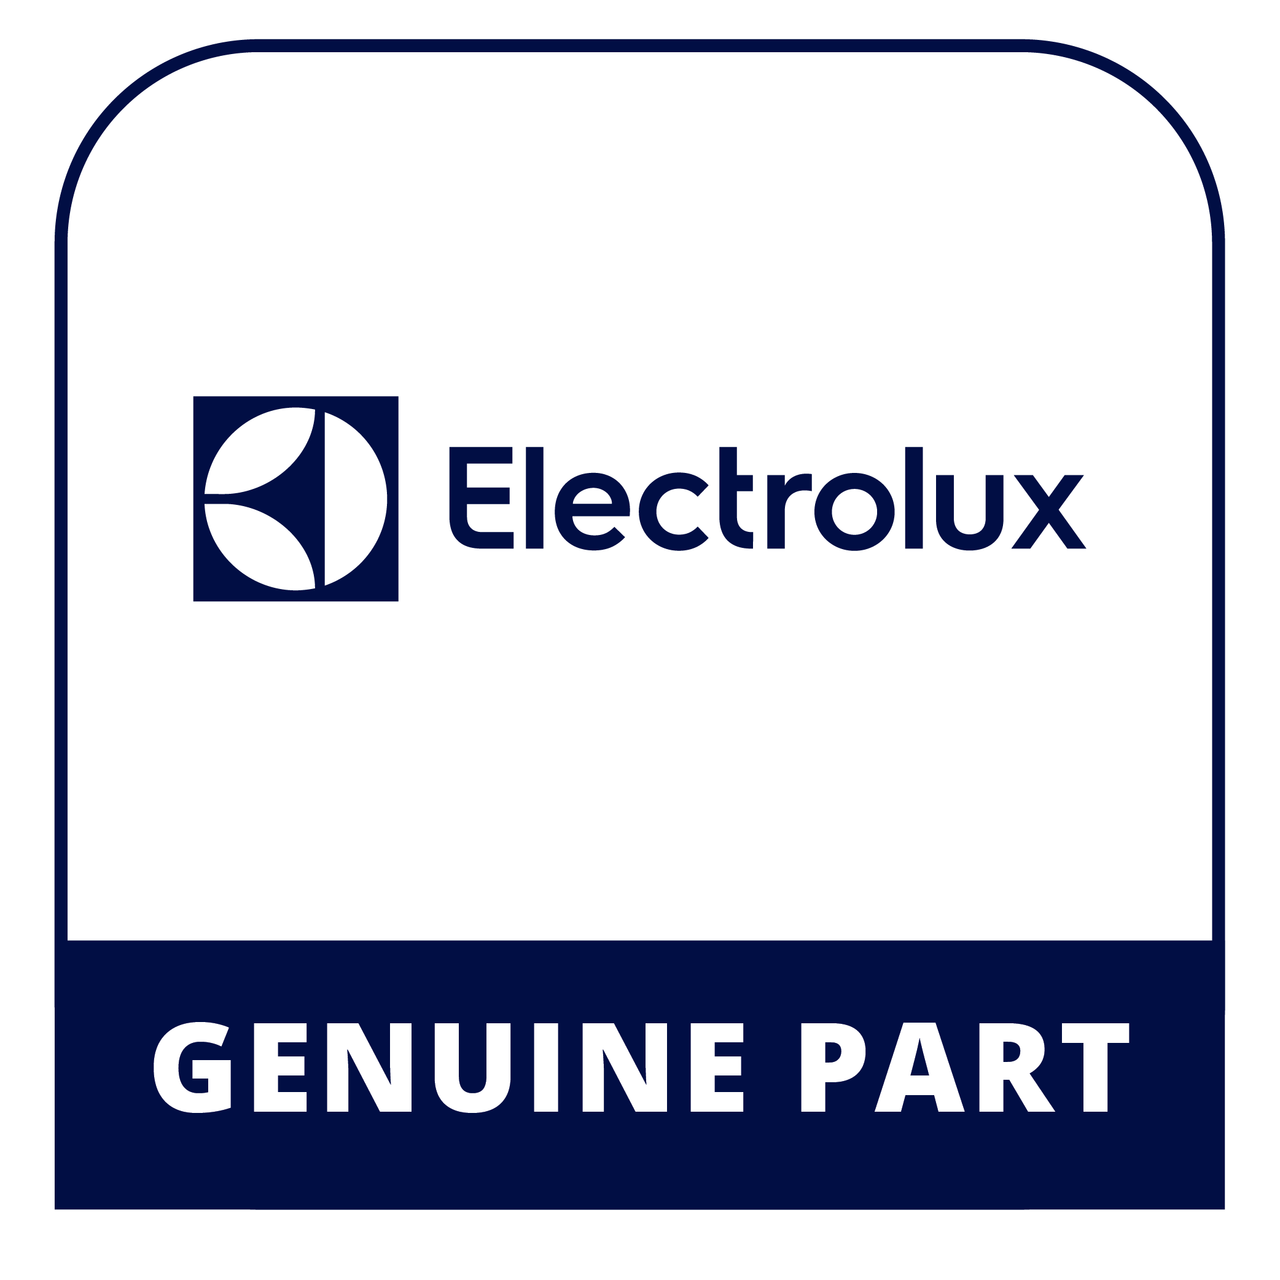 Frigidaire - Electrolux 318053103 Gasket - Genuine Electrolux Part